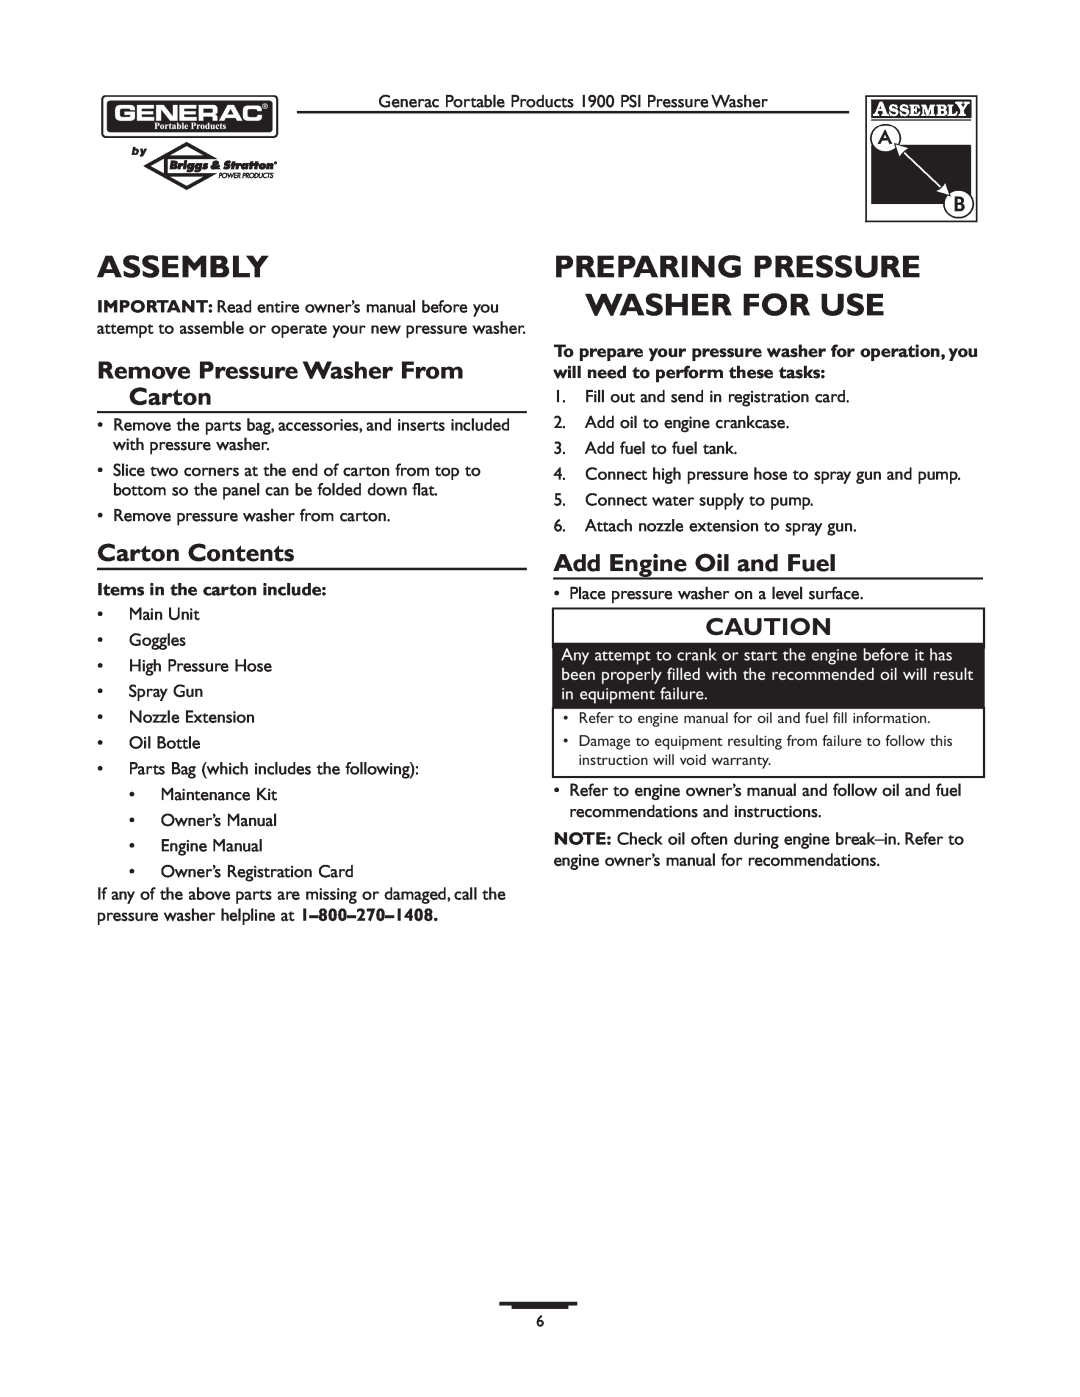 Briggs & Stratton 1900PSI Assembly, Preparing Pressure Washer For Use, Remove Pressure Washer From Carton, Carton Contents 